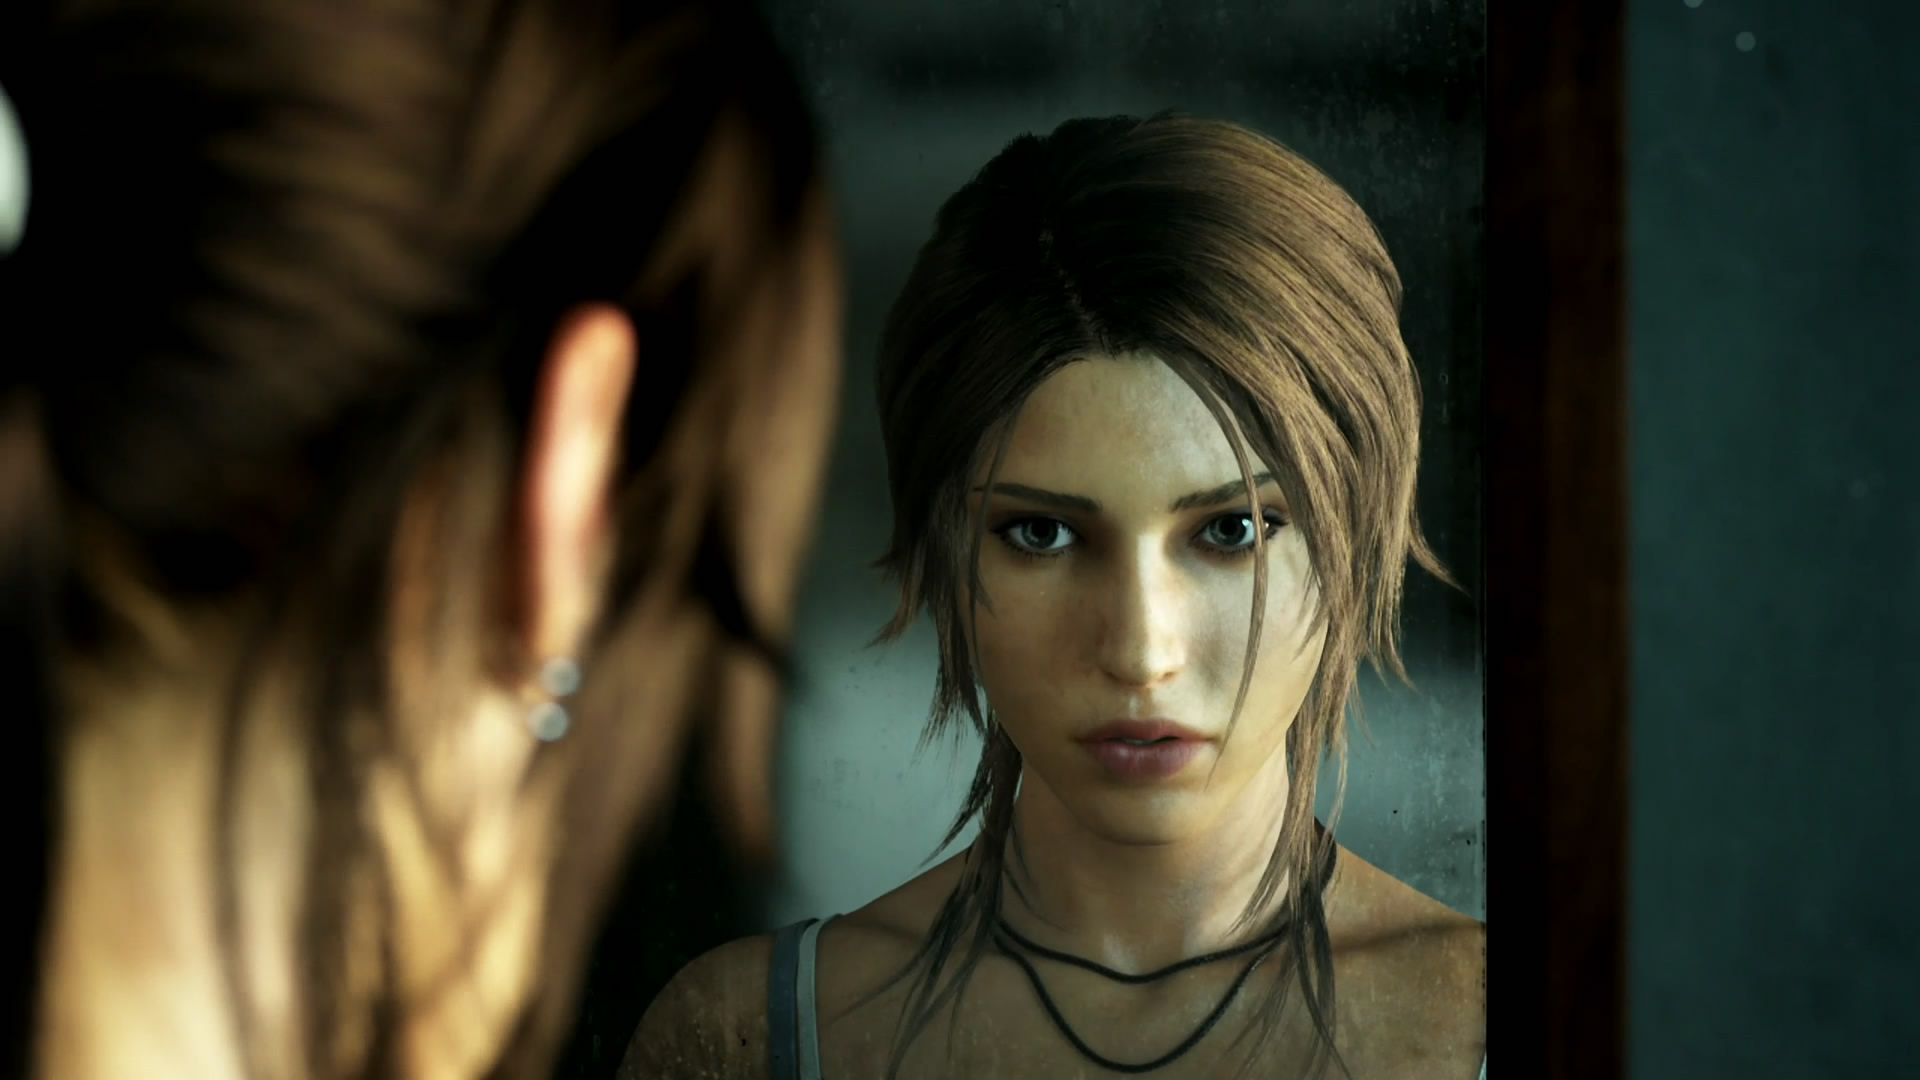 Lara Croft hd wallpaper of Tomb Raider Daily pics update